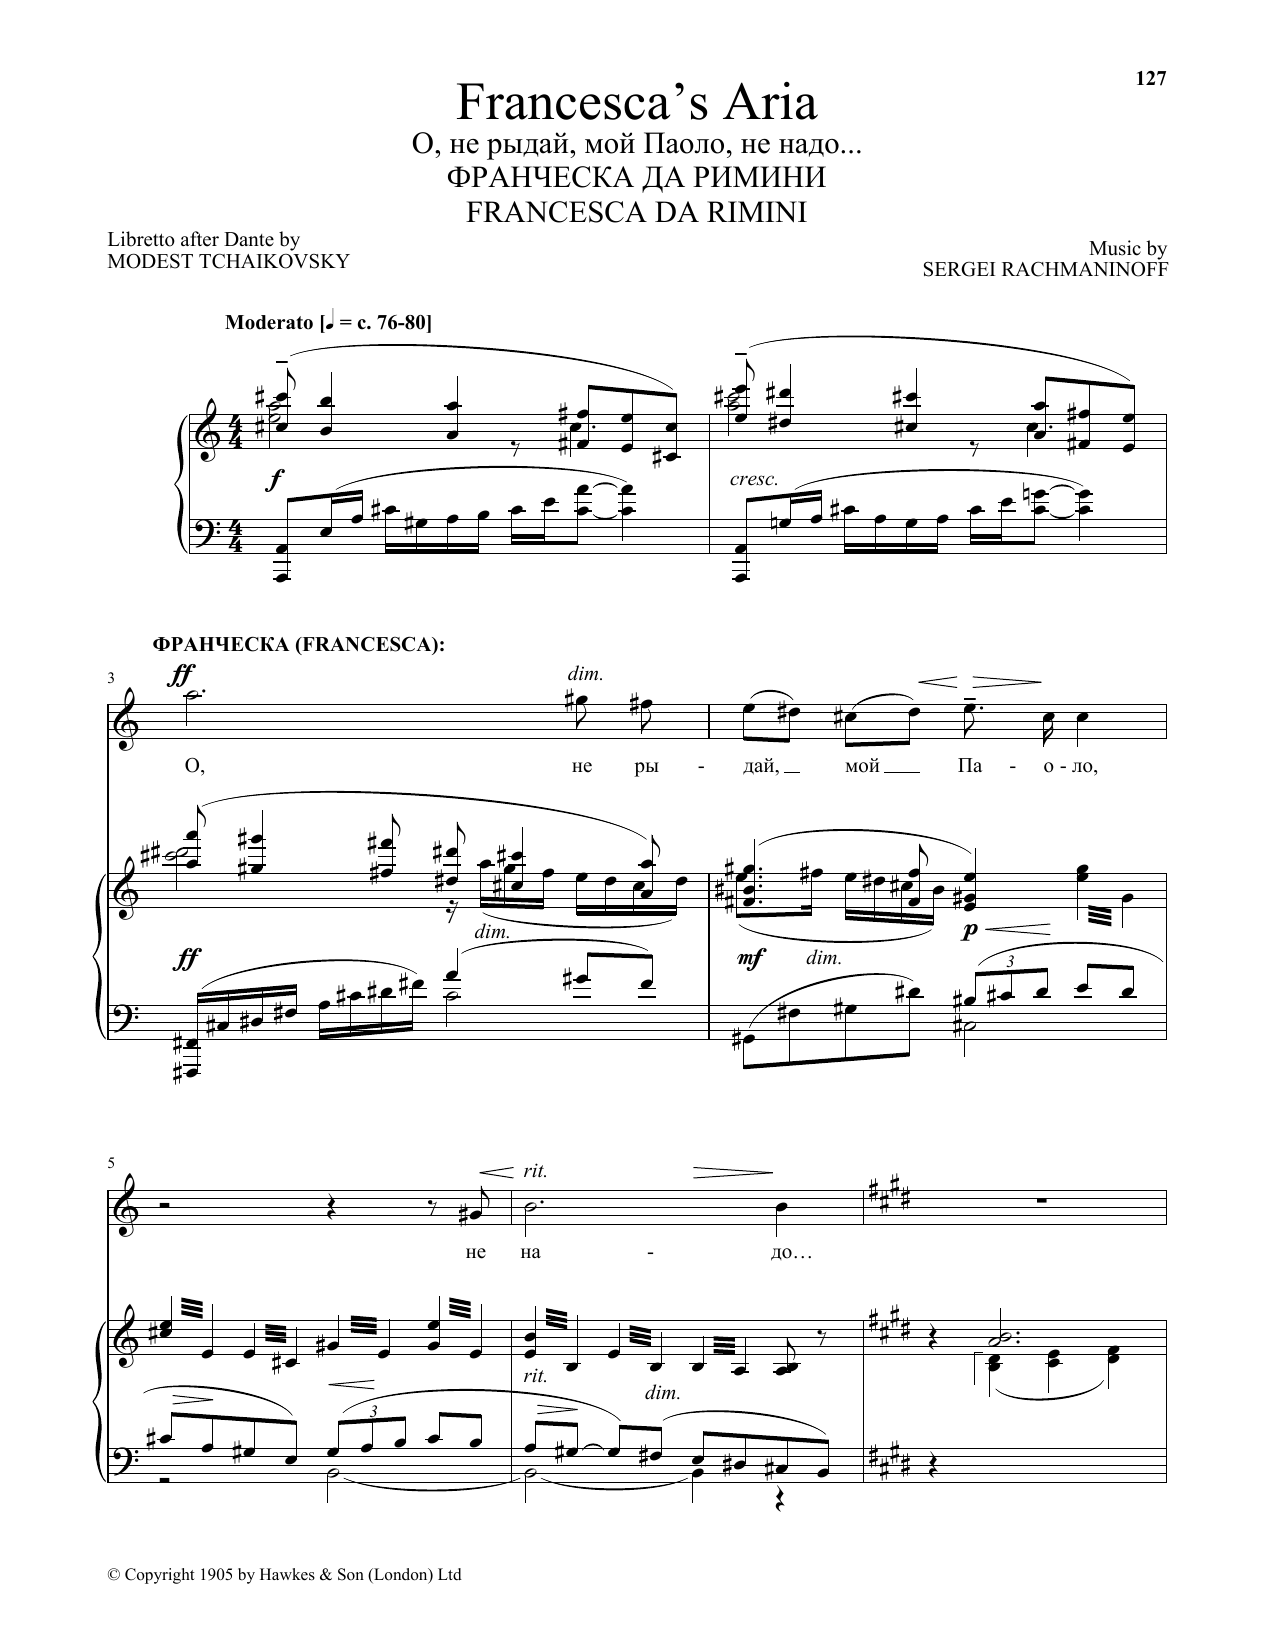 Sergei Rachmaninoff Francesca's Aria (from Francesca da Rimini) Sheet Music Notes & Chords for Piano & Vocal - Download or Print PDF